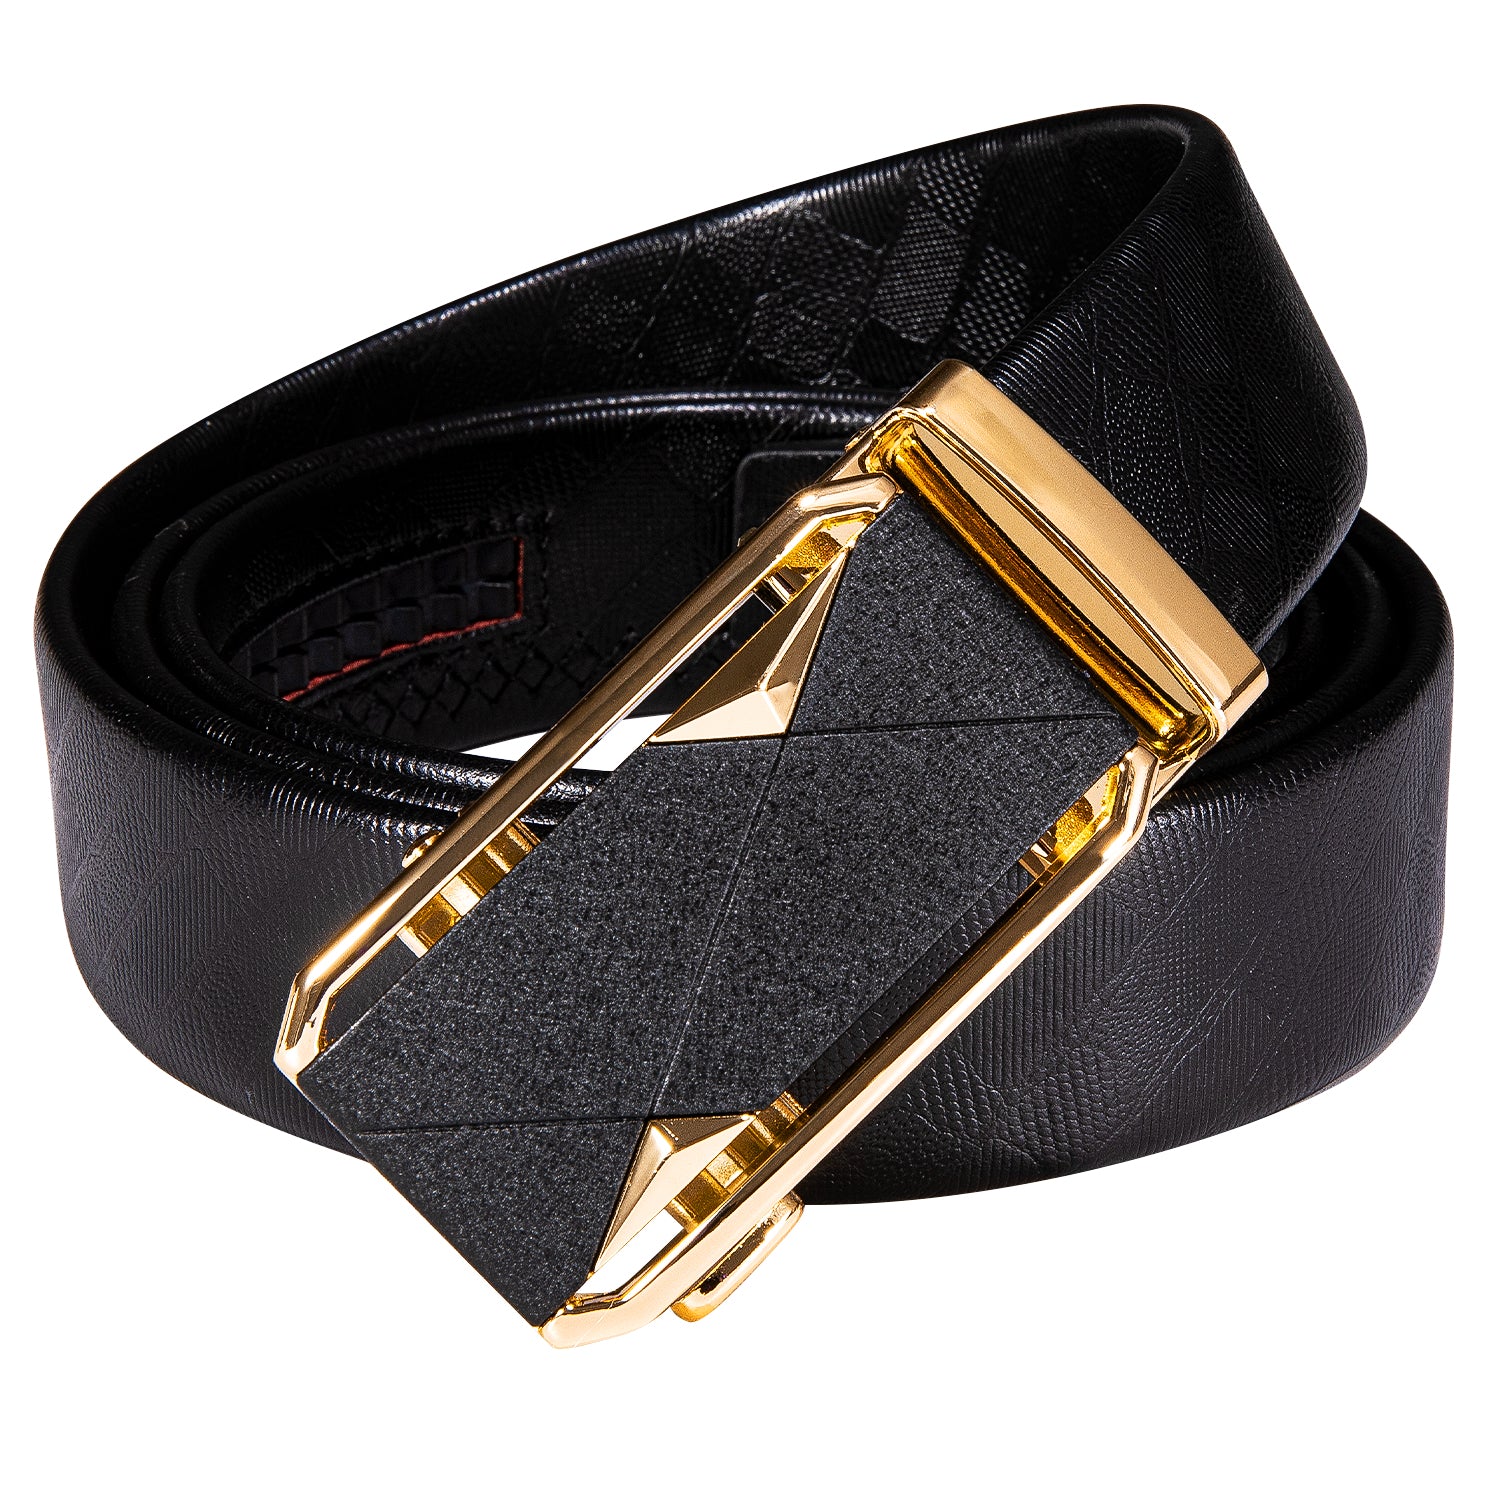 Novelty Golden Black Rectangle Metal Buckle Genuine Leather Belt 43 inch to 63 inch